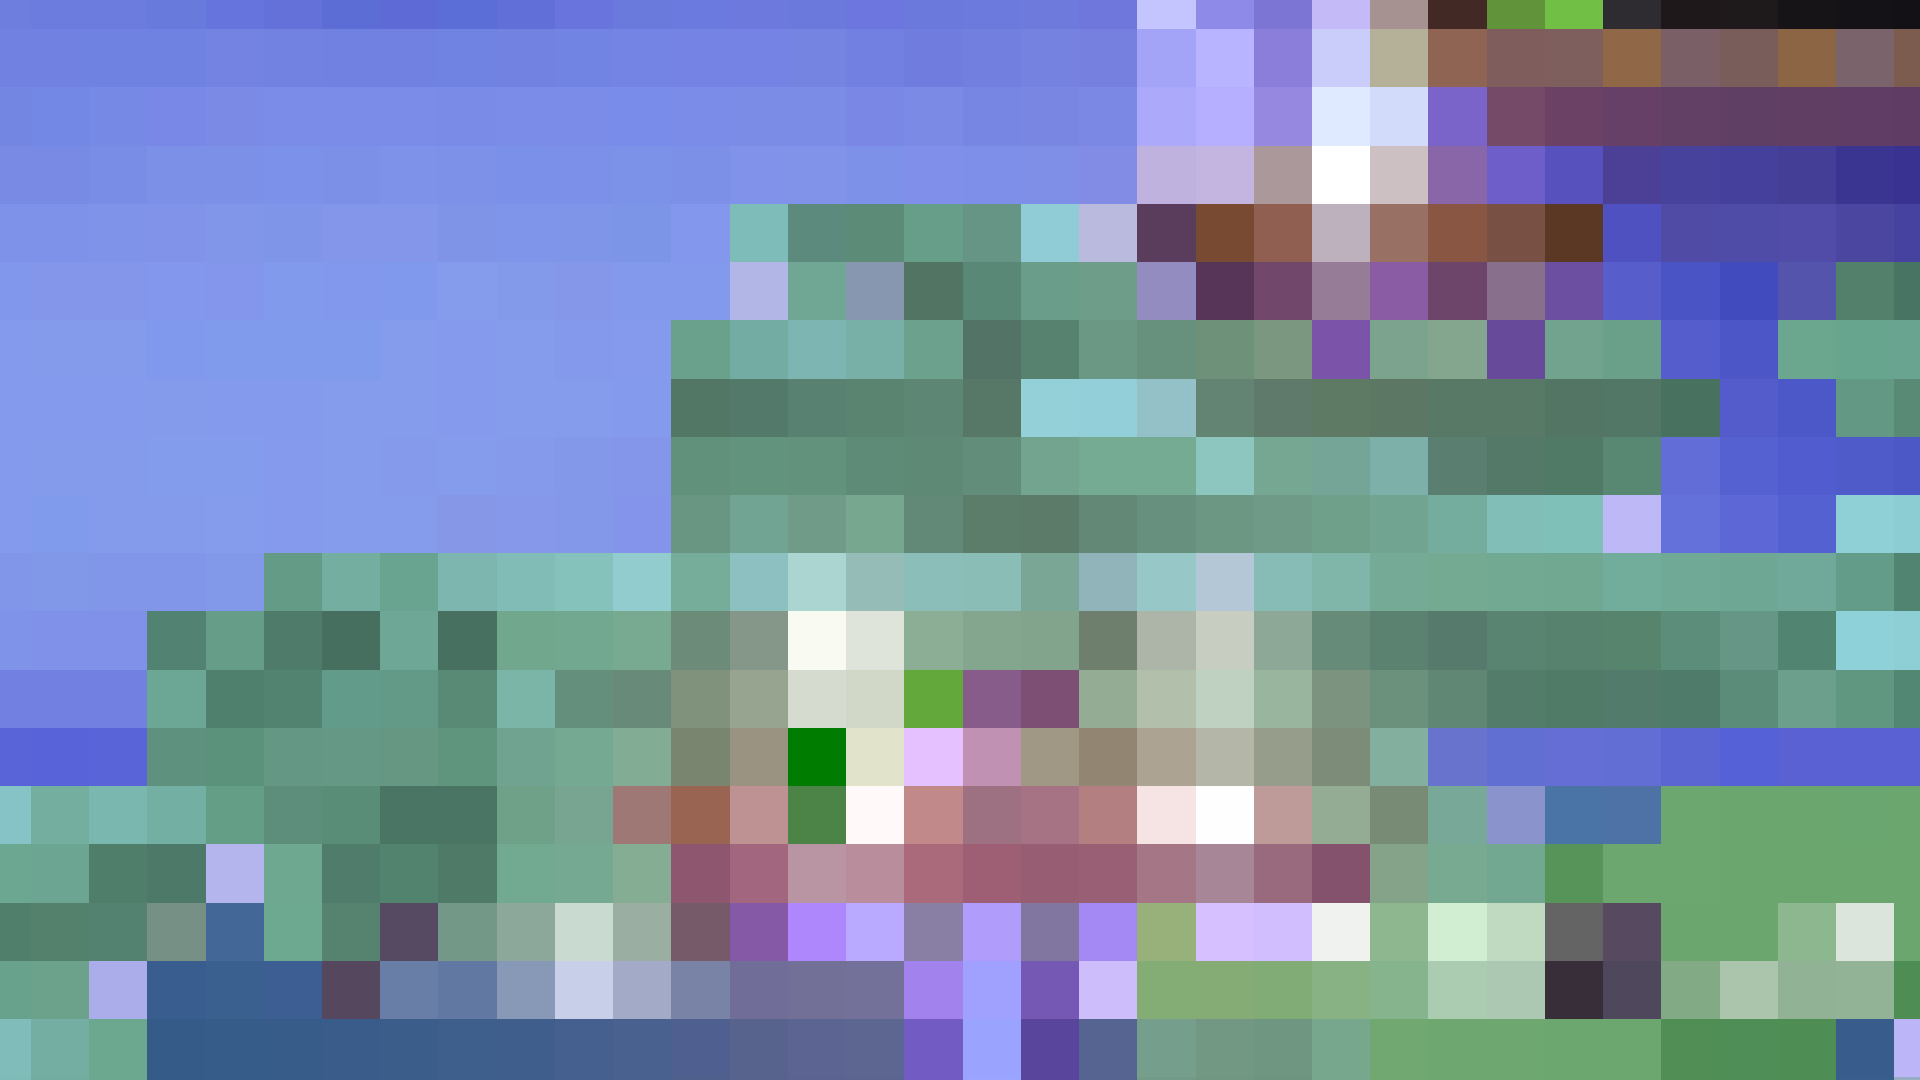 a screenshot pixelated beyond recognition